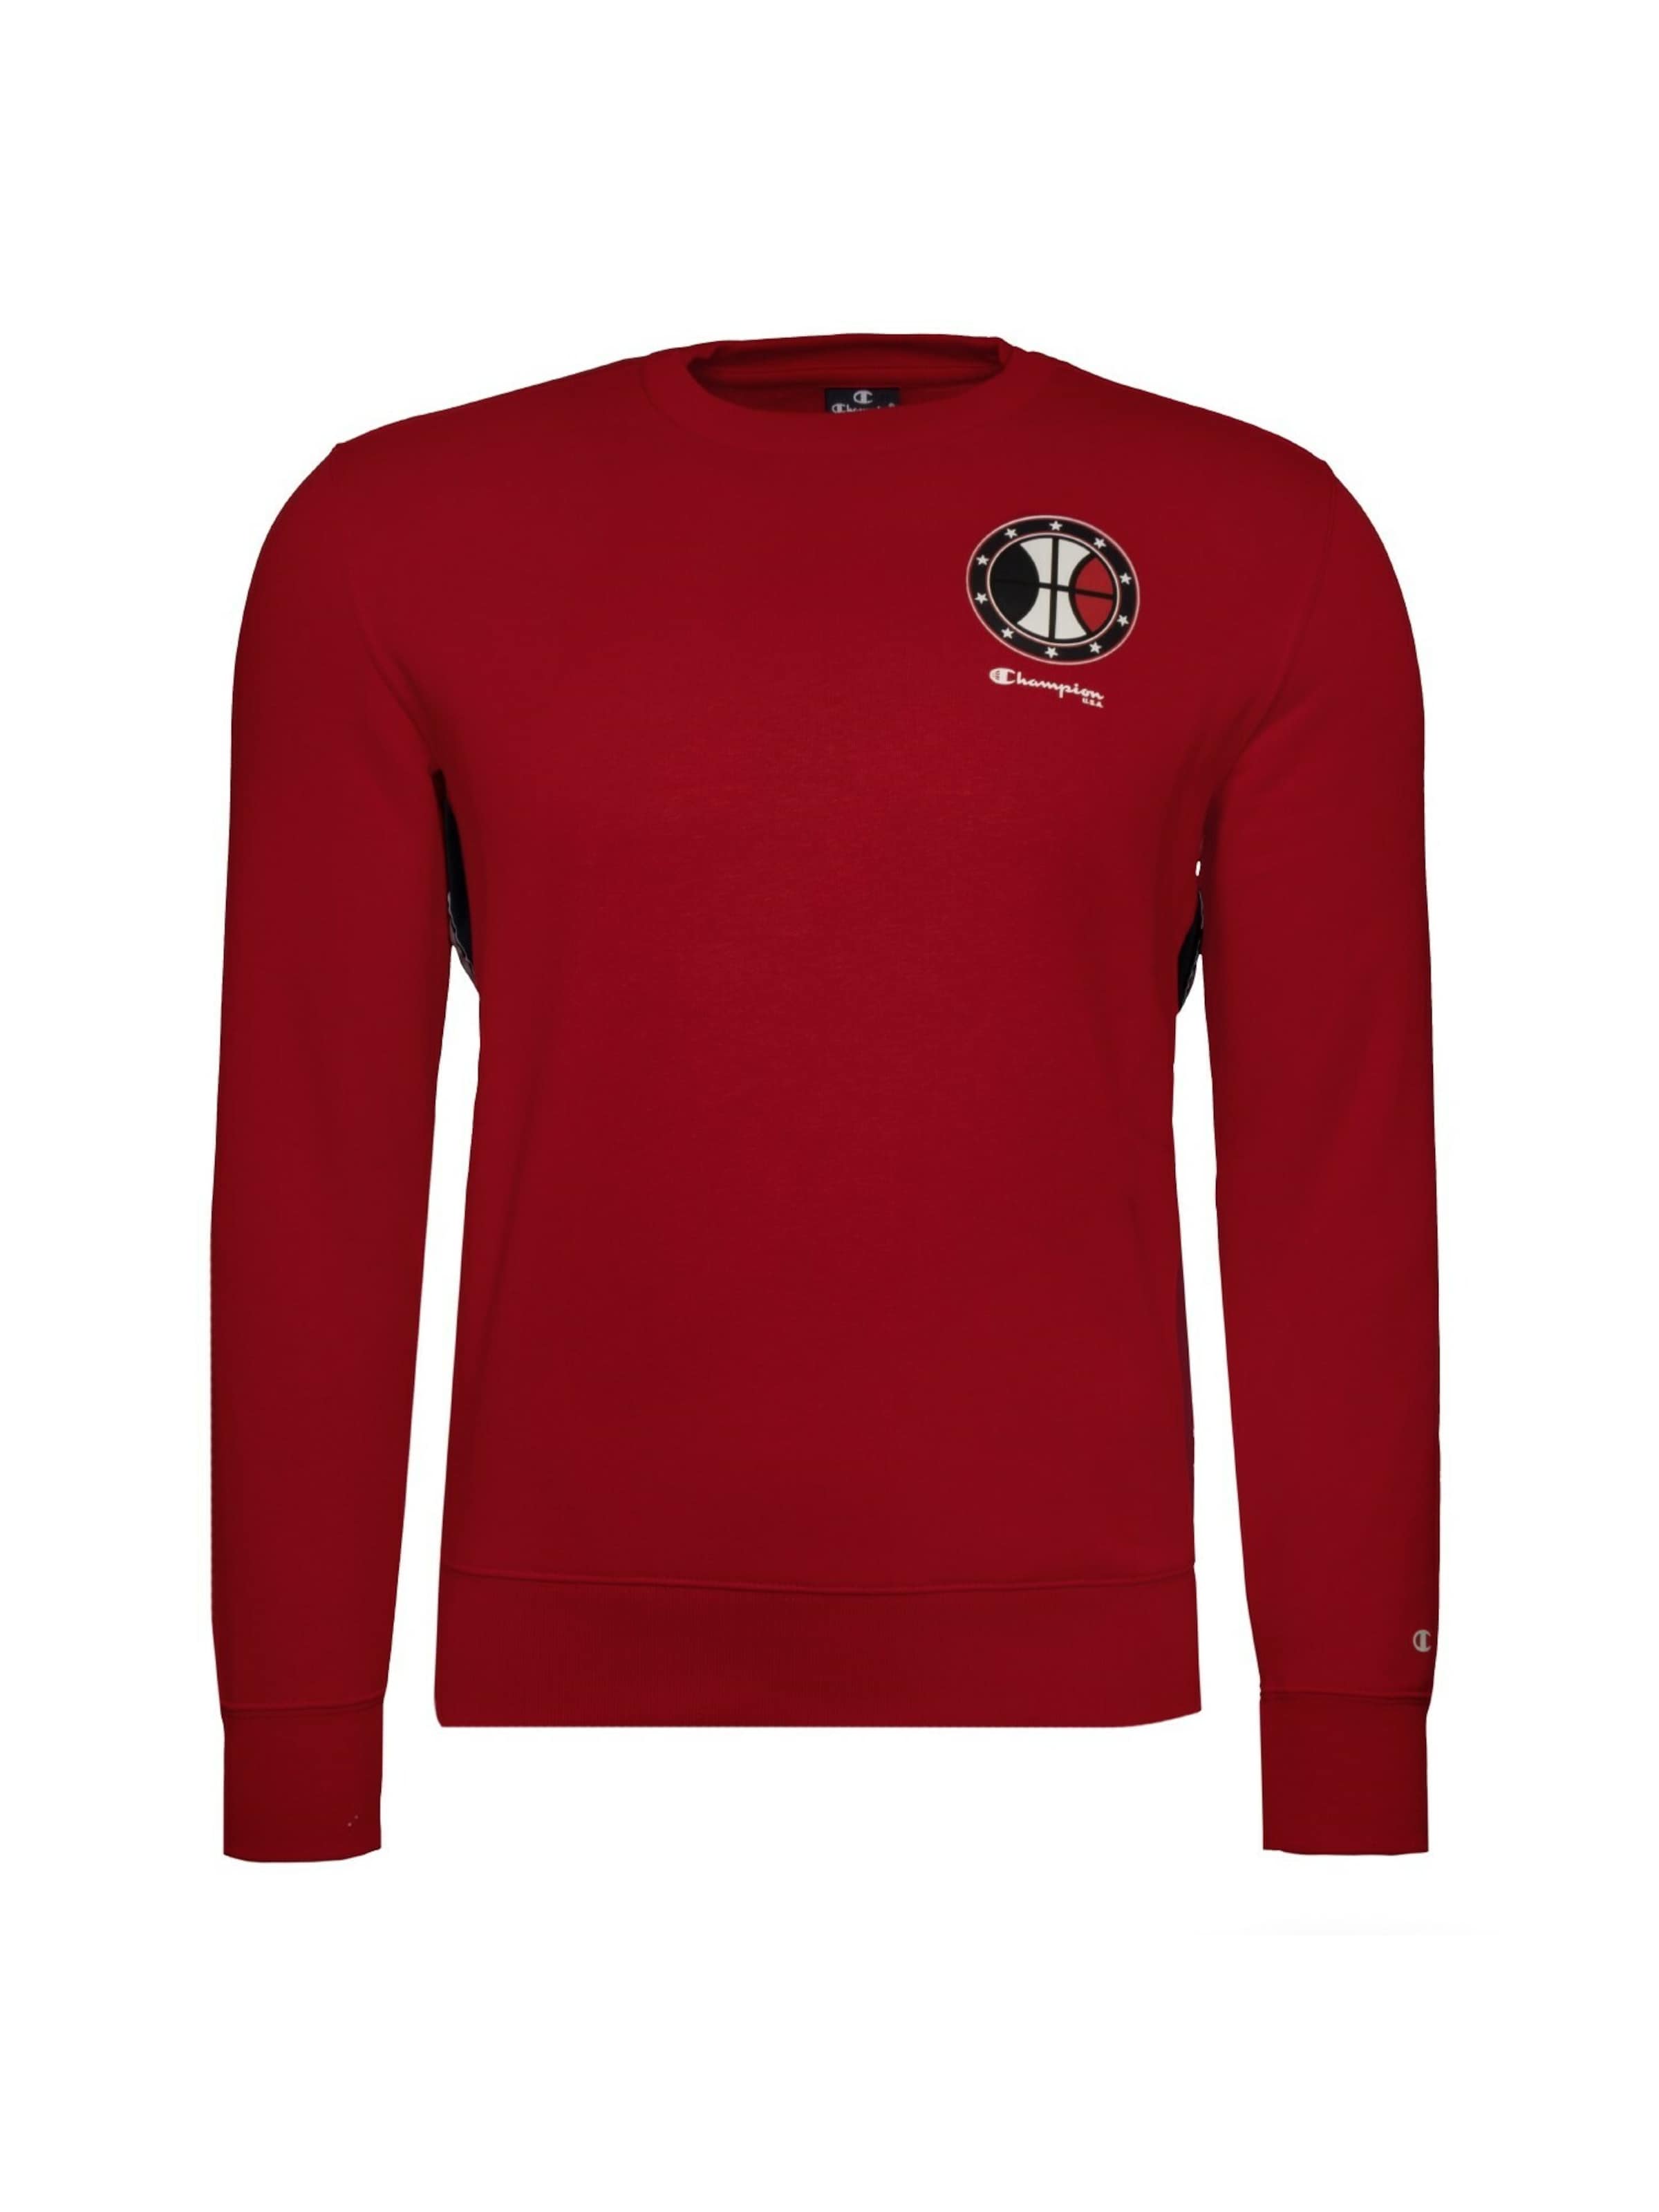 Männer Sweat Champion Authentic Athletic Apparel Sweatshirt in Rot - OE57864